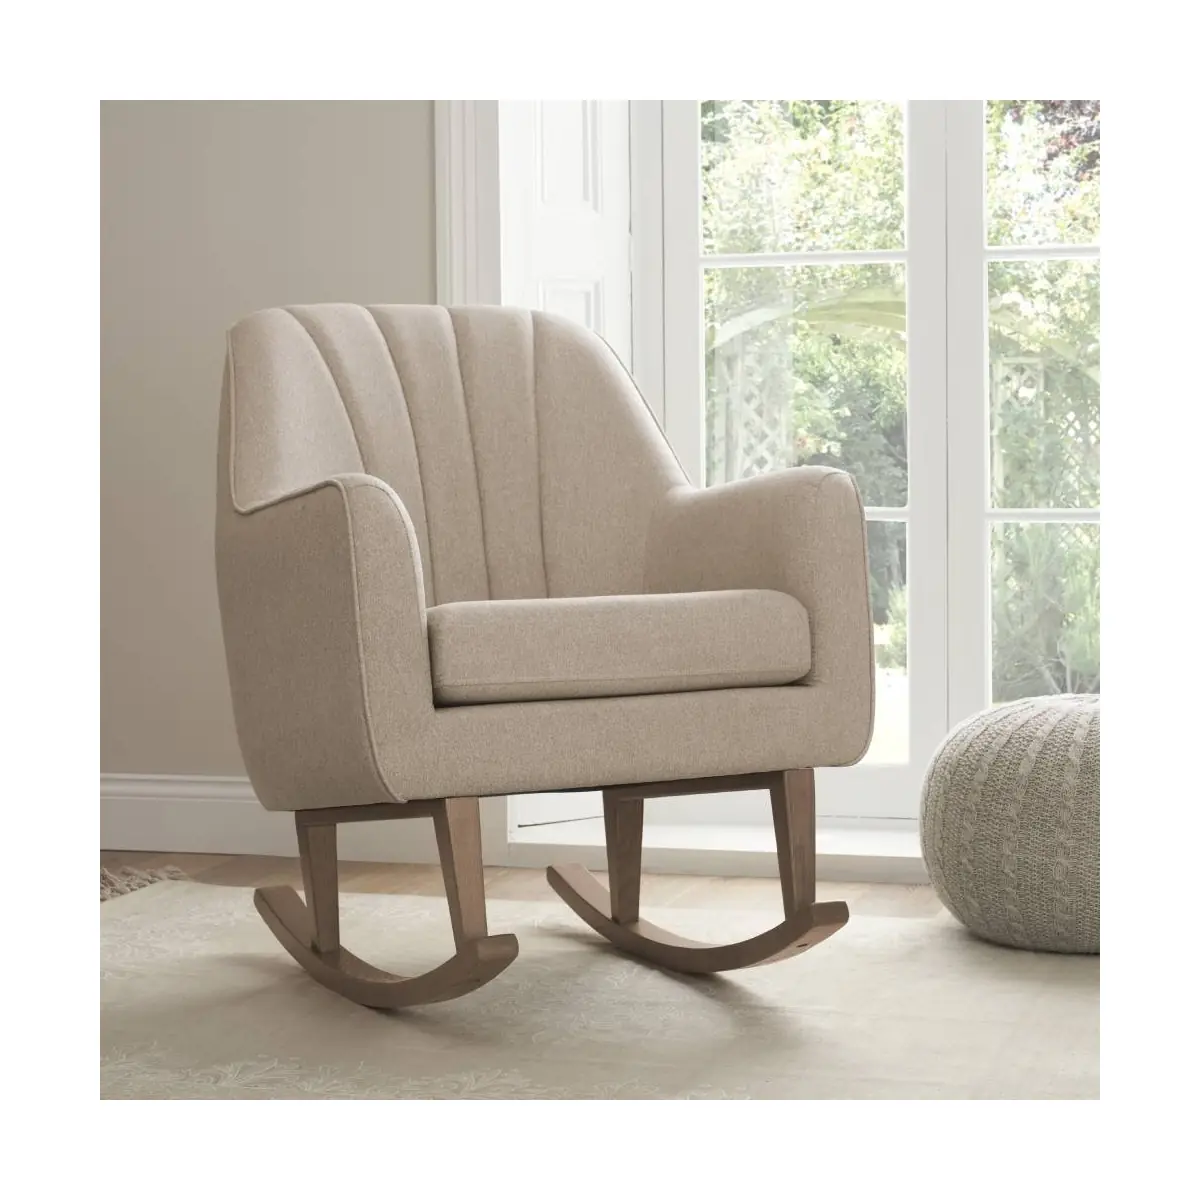 Image of Tutti Bambini Noah Rocking Chair-Stone/Natural + Free Nursing Pillow Worth £59.99!